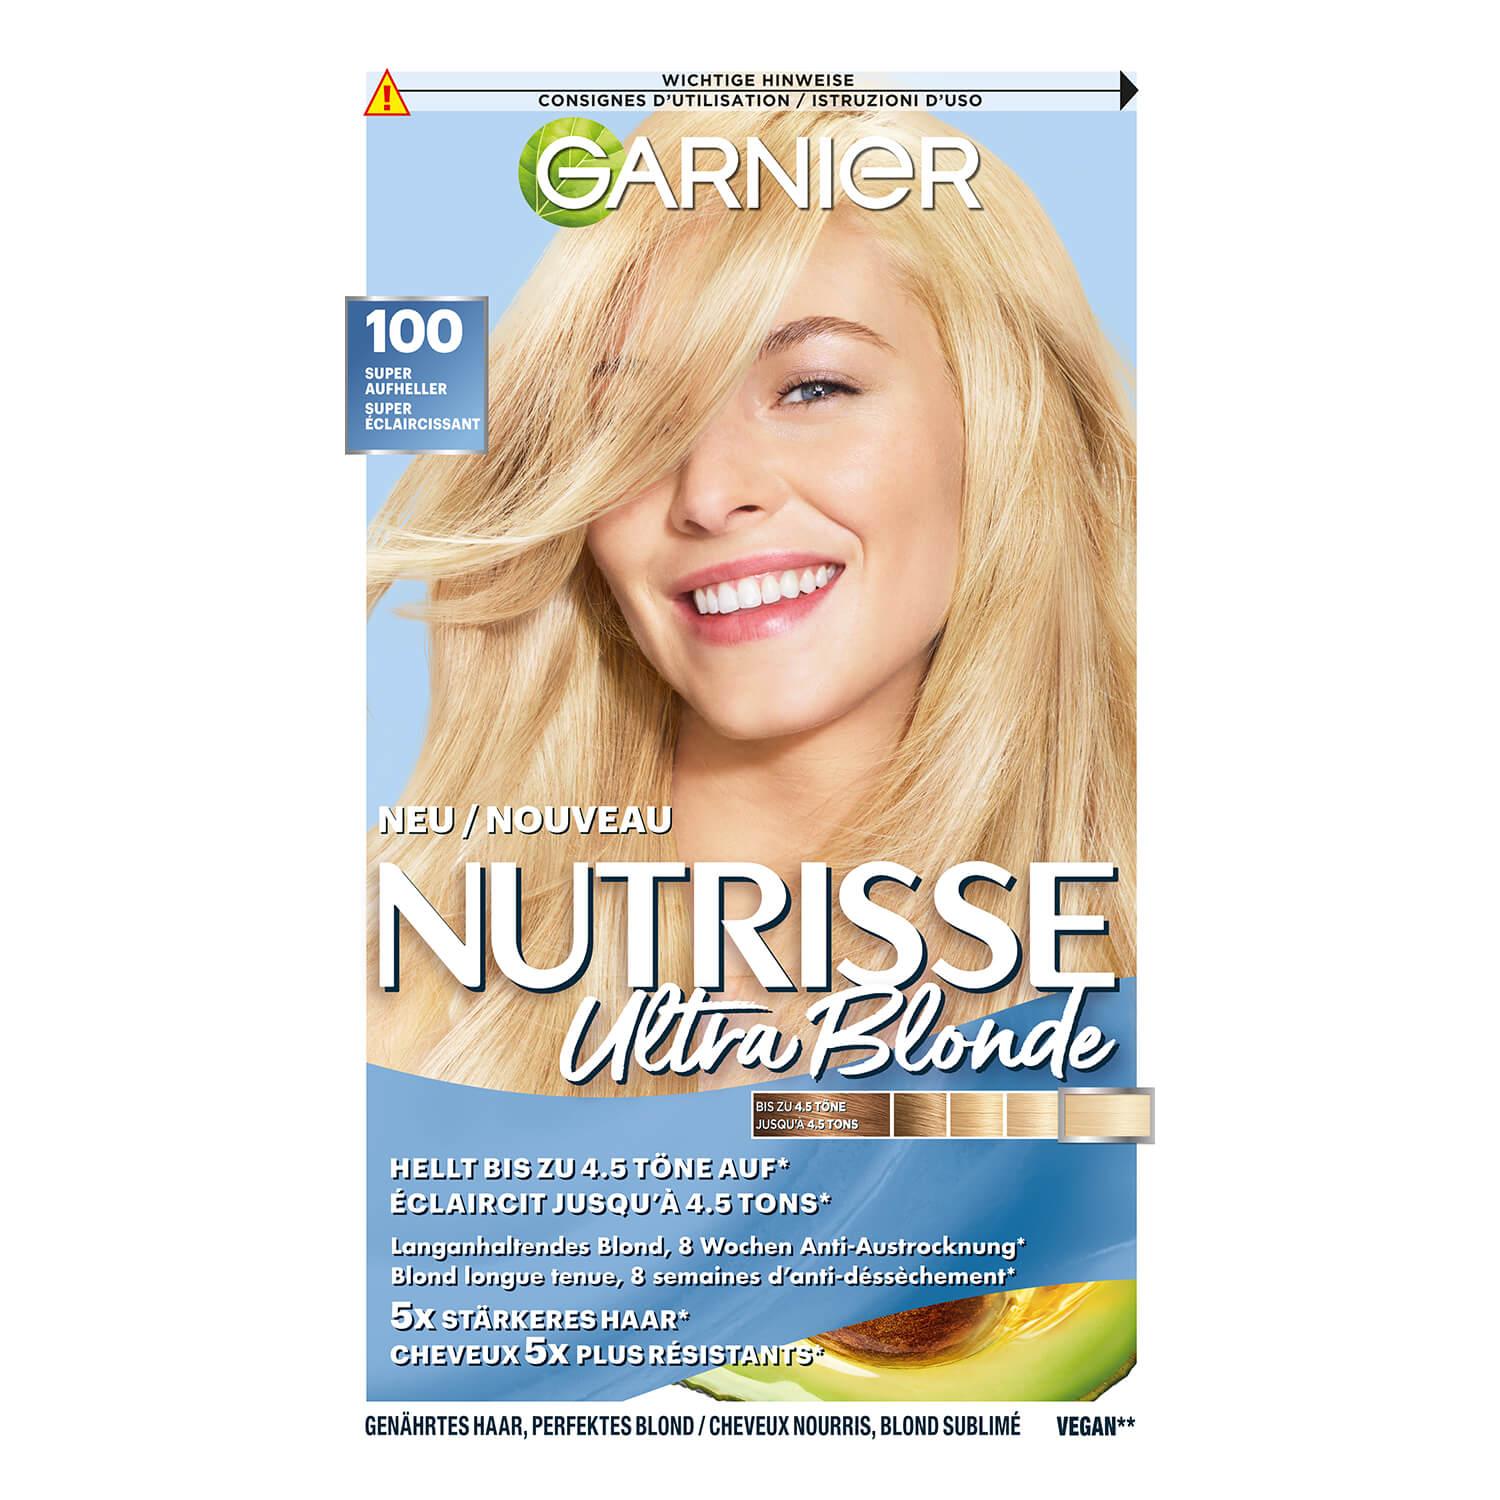 Nutrisse - Ultra Blonde 100 Super Aufheller